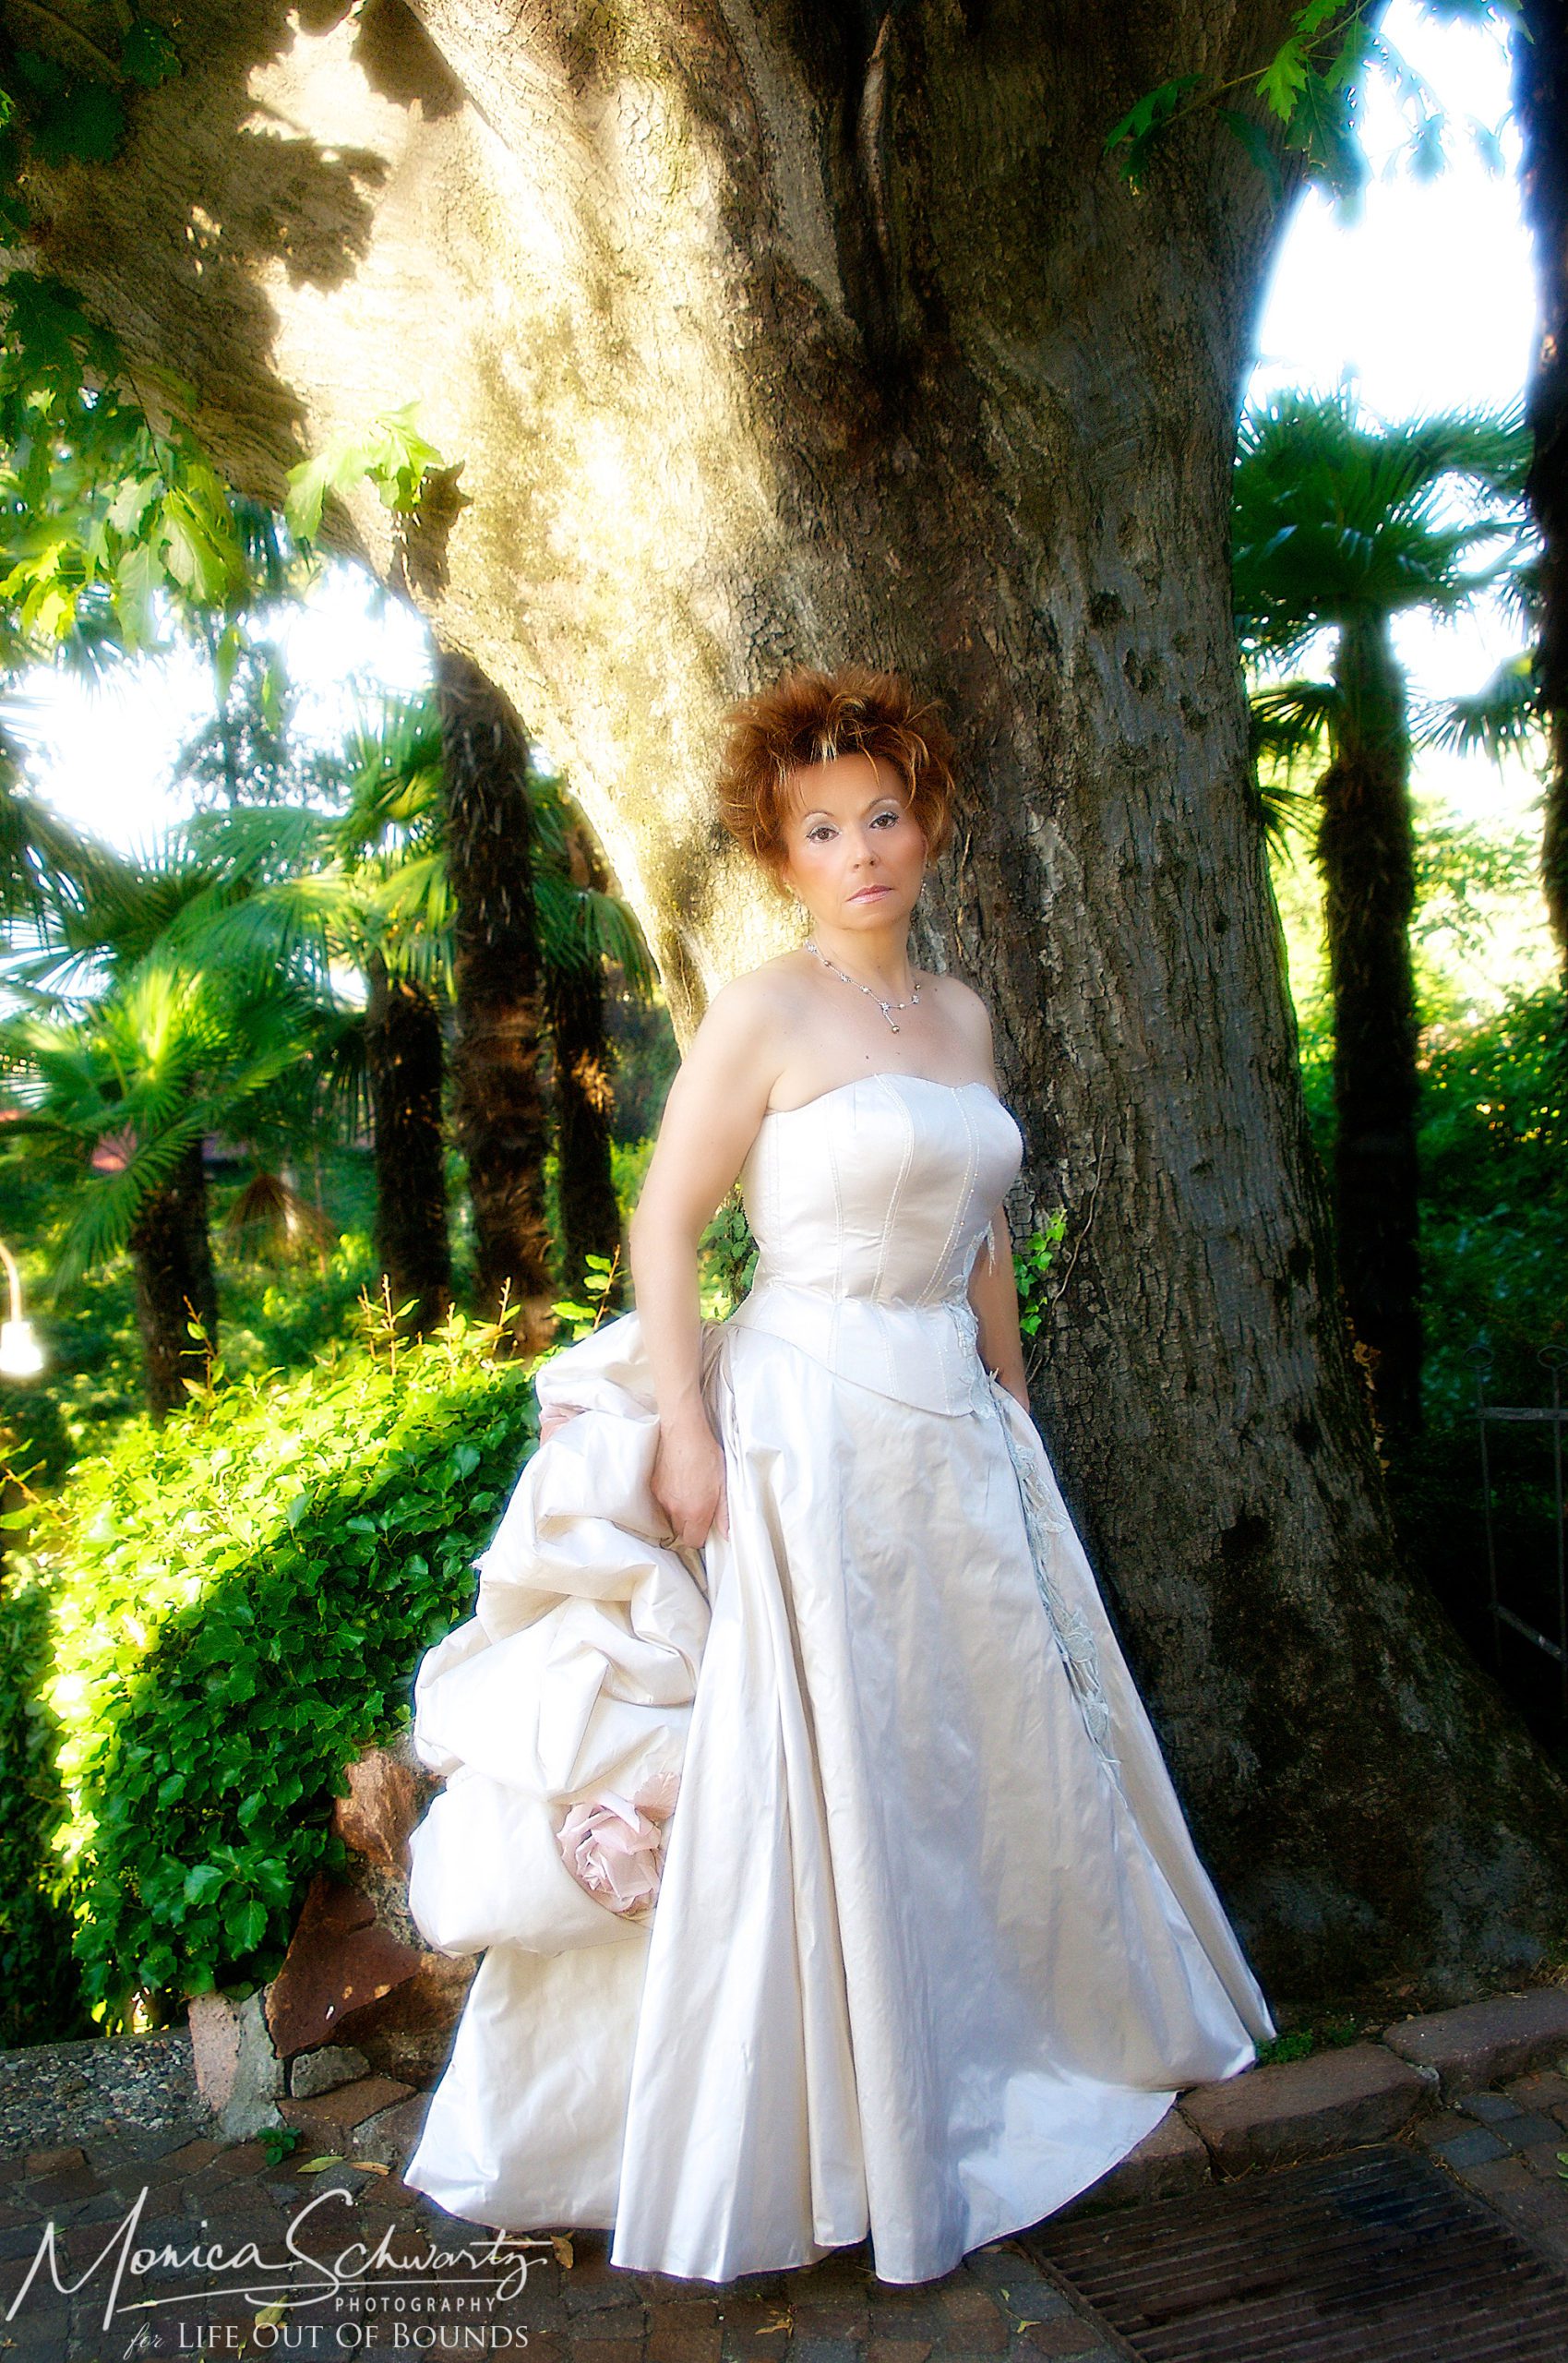 Portrait-of-an-Italian-woman-wearing-a-rose-ball-gown-in-a-garden-setting